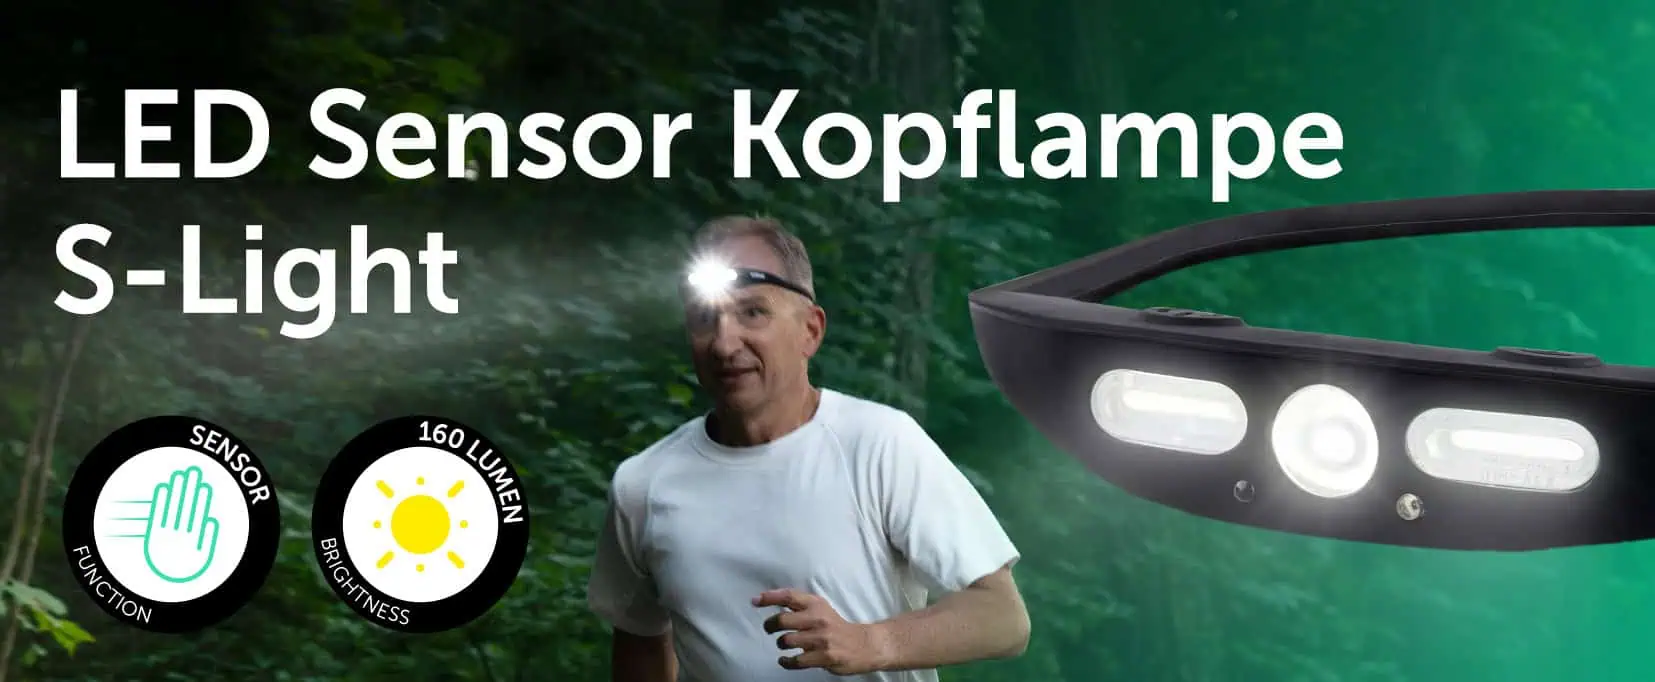 LED sensor head lamp S-Light